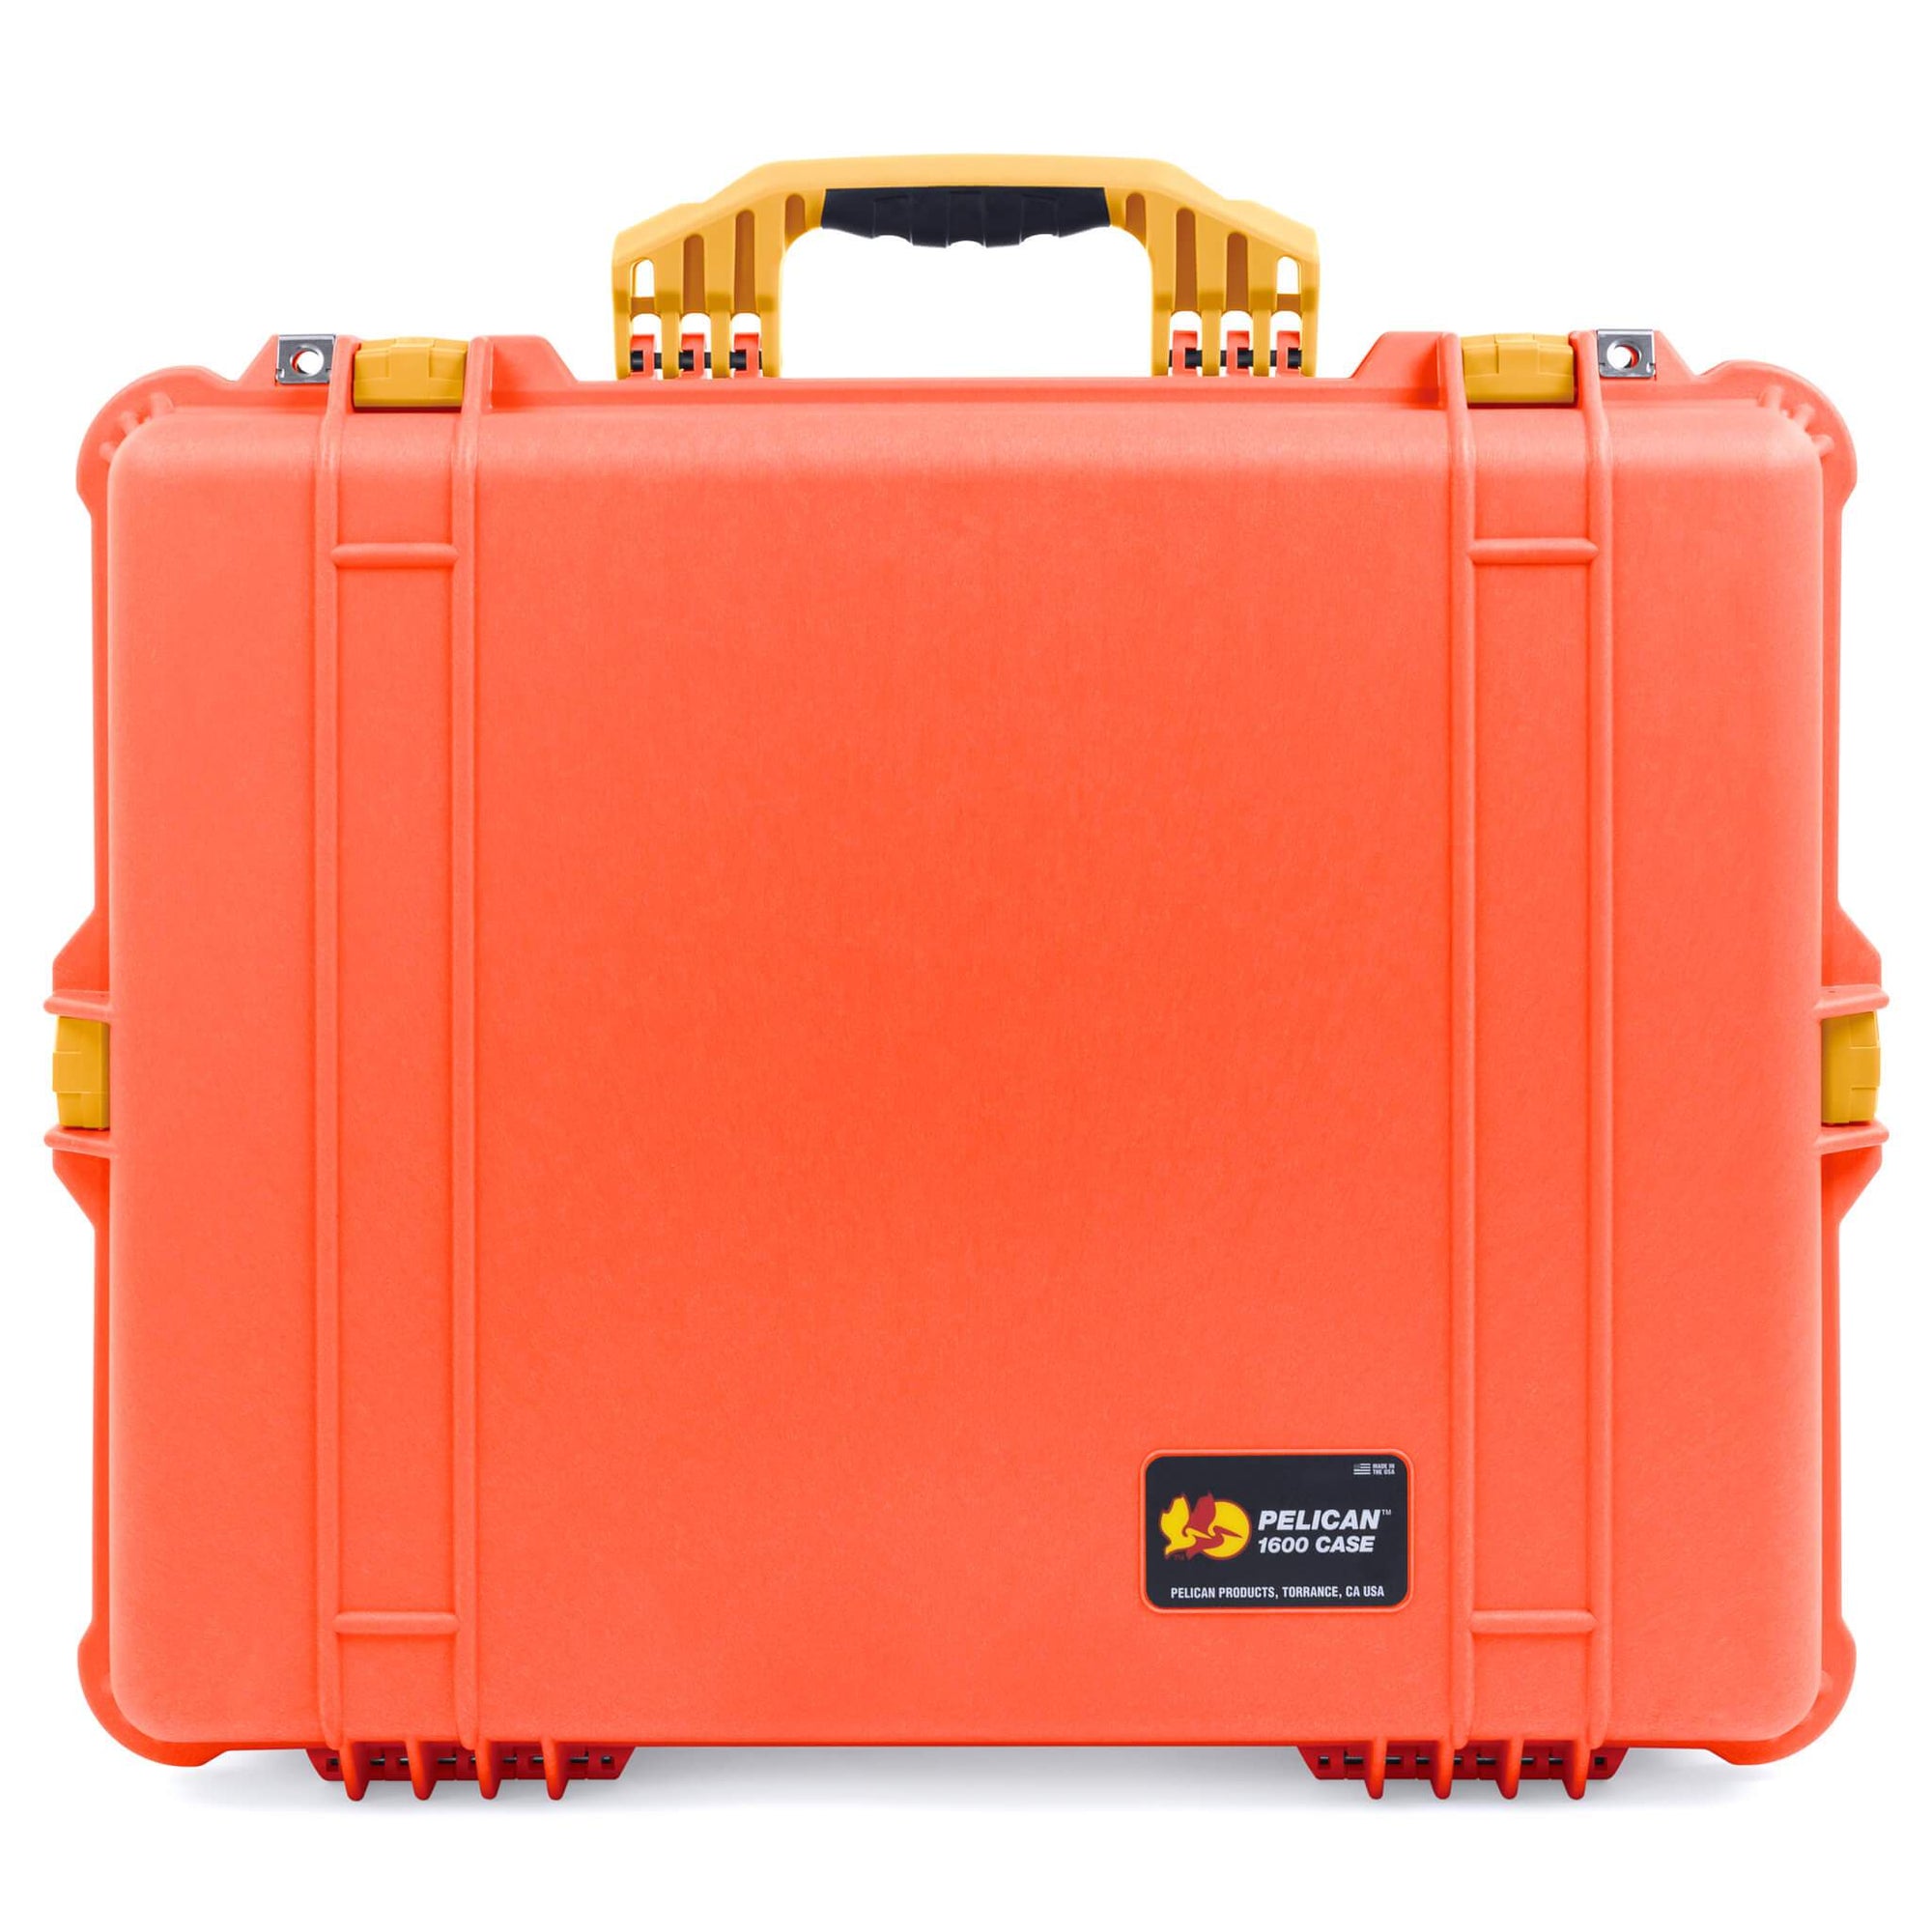 Pelican 1600 Case, Orange with Yellow Handle & Latches ColorCase 